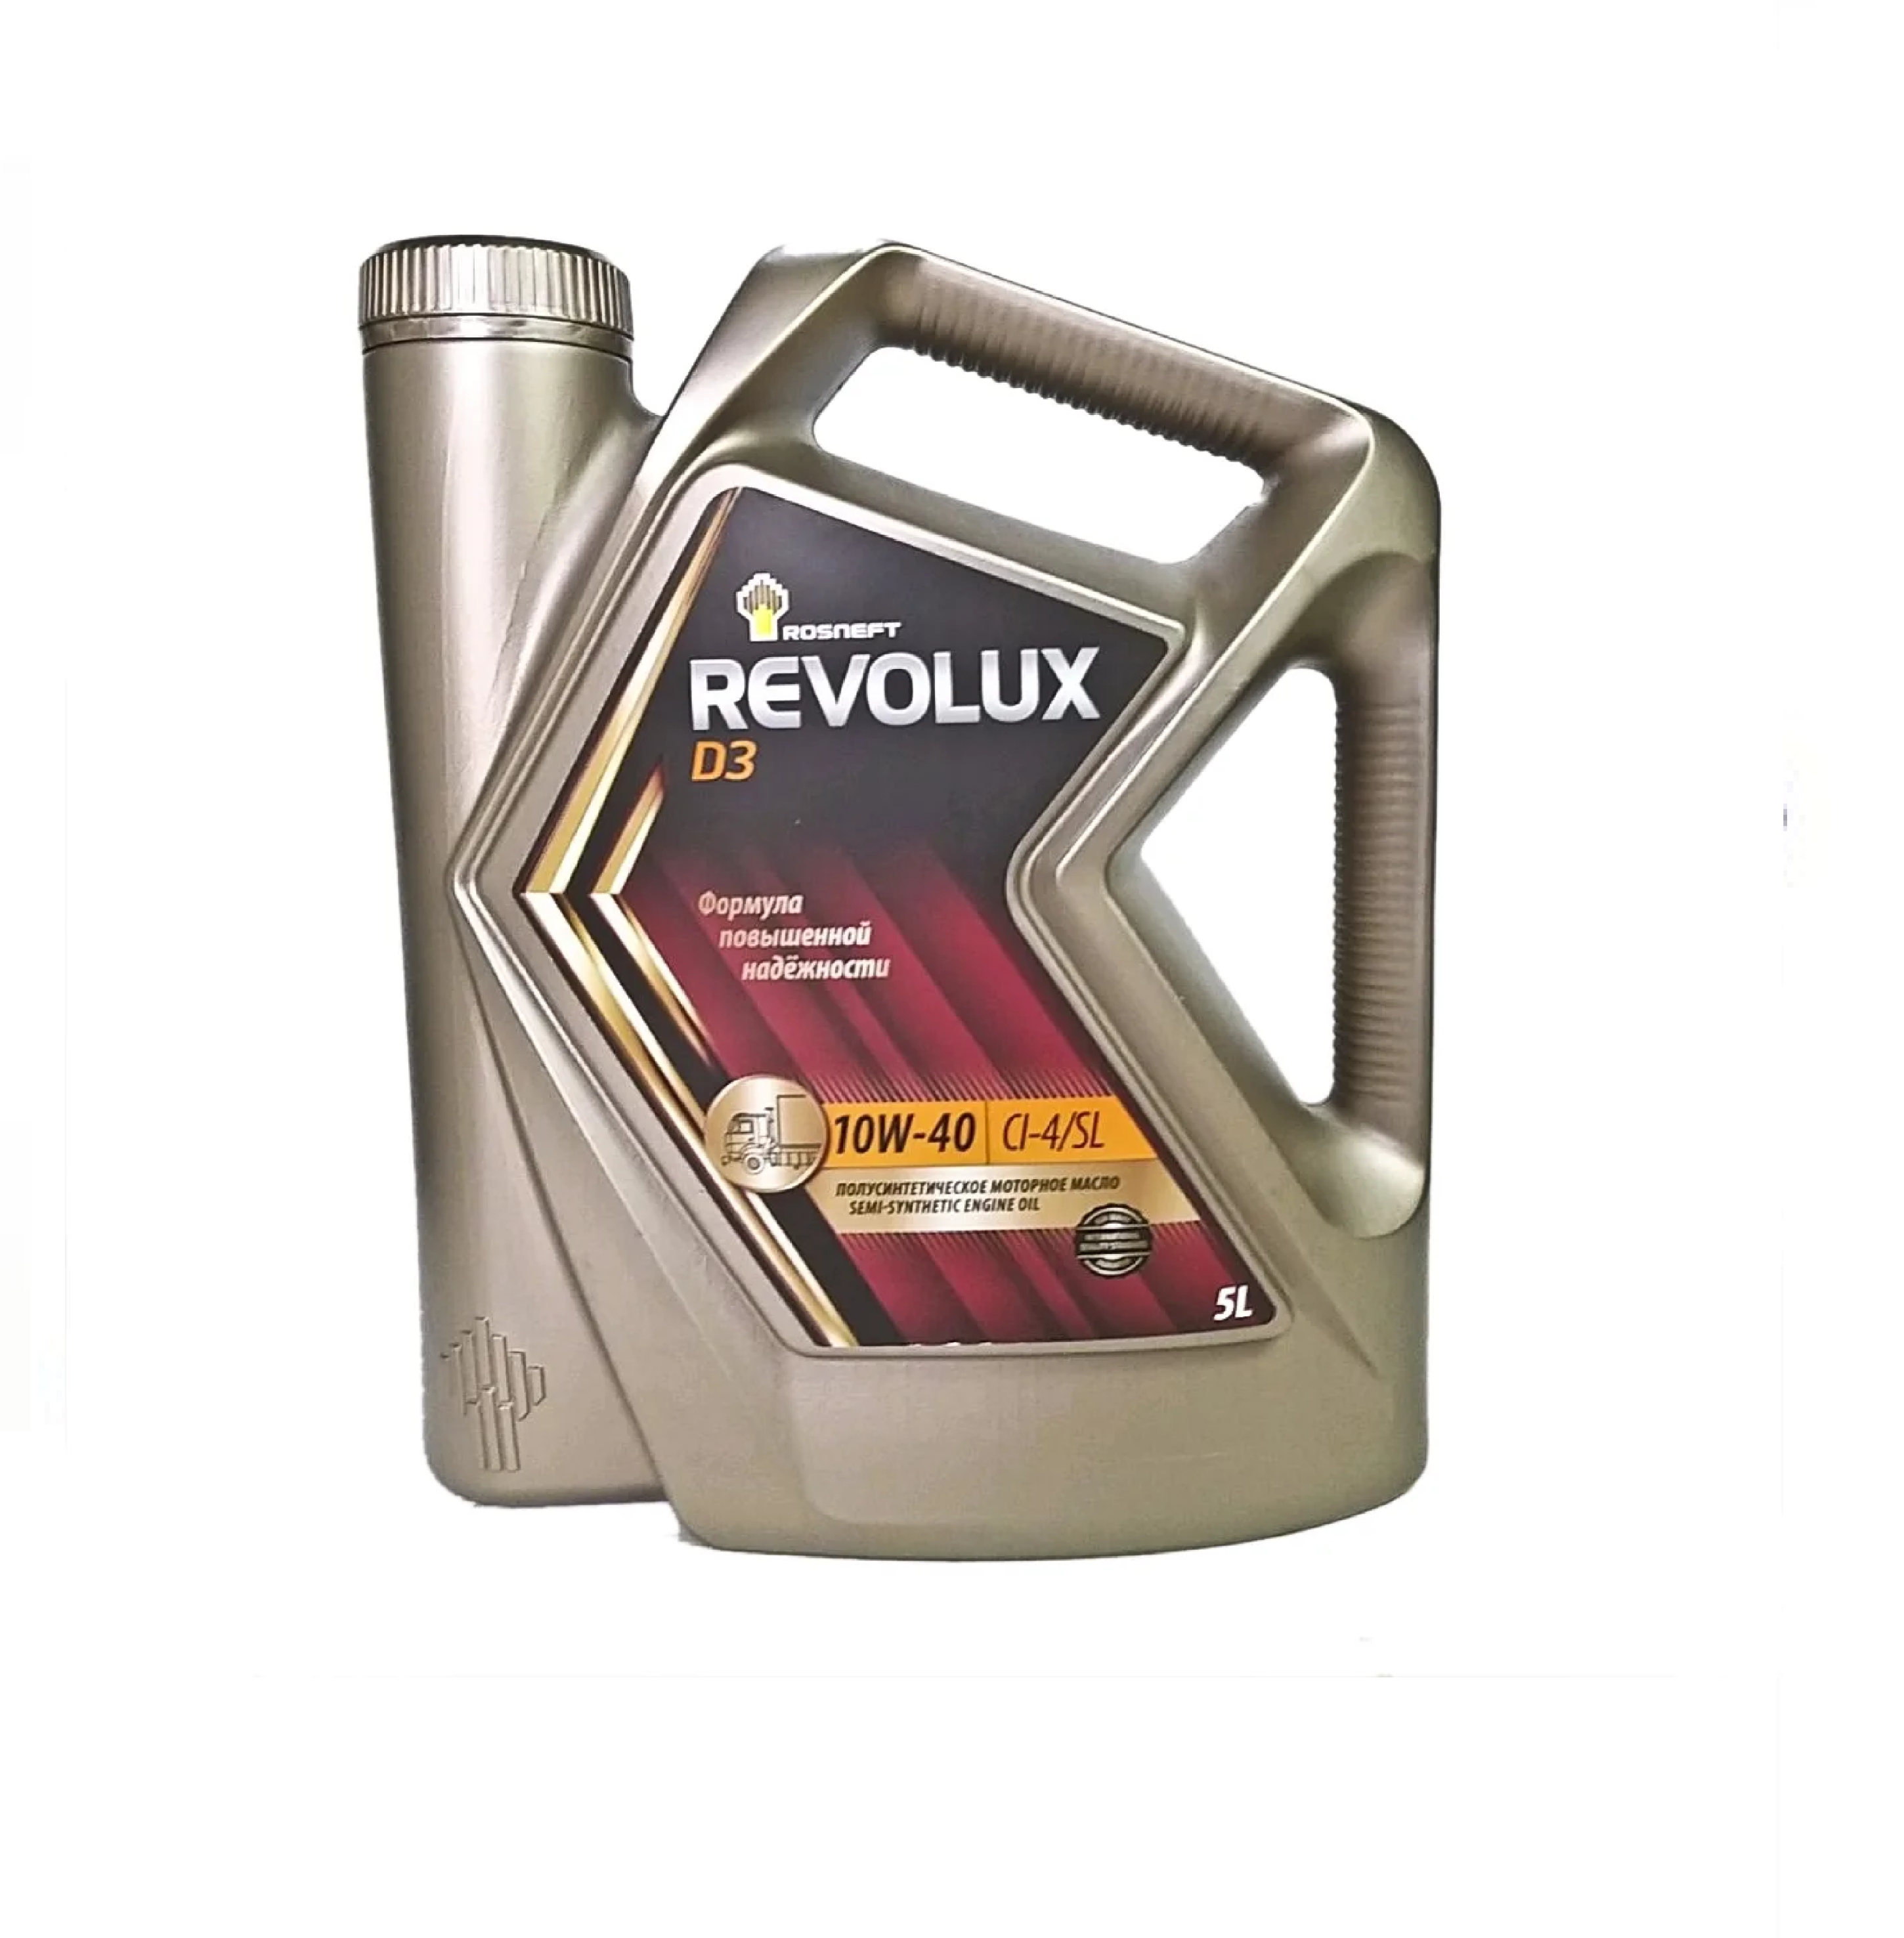 Масло моторное Rosneft Revolux d3 5w–40 20л. Масло моторное Роснефть 10w 40 полусинтетика. Масло моторное Rosneft Revolux d3 10w/- 40 ci-4/SL. Rosneft Revolux d1 15w-40 (5л.). Роснефть 10w 40 купить